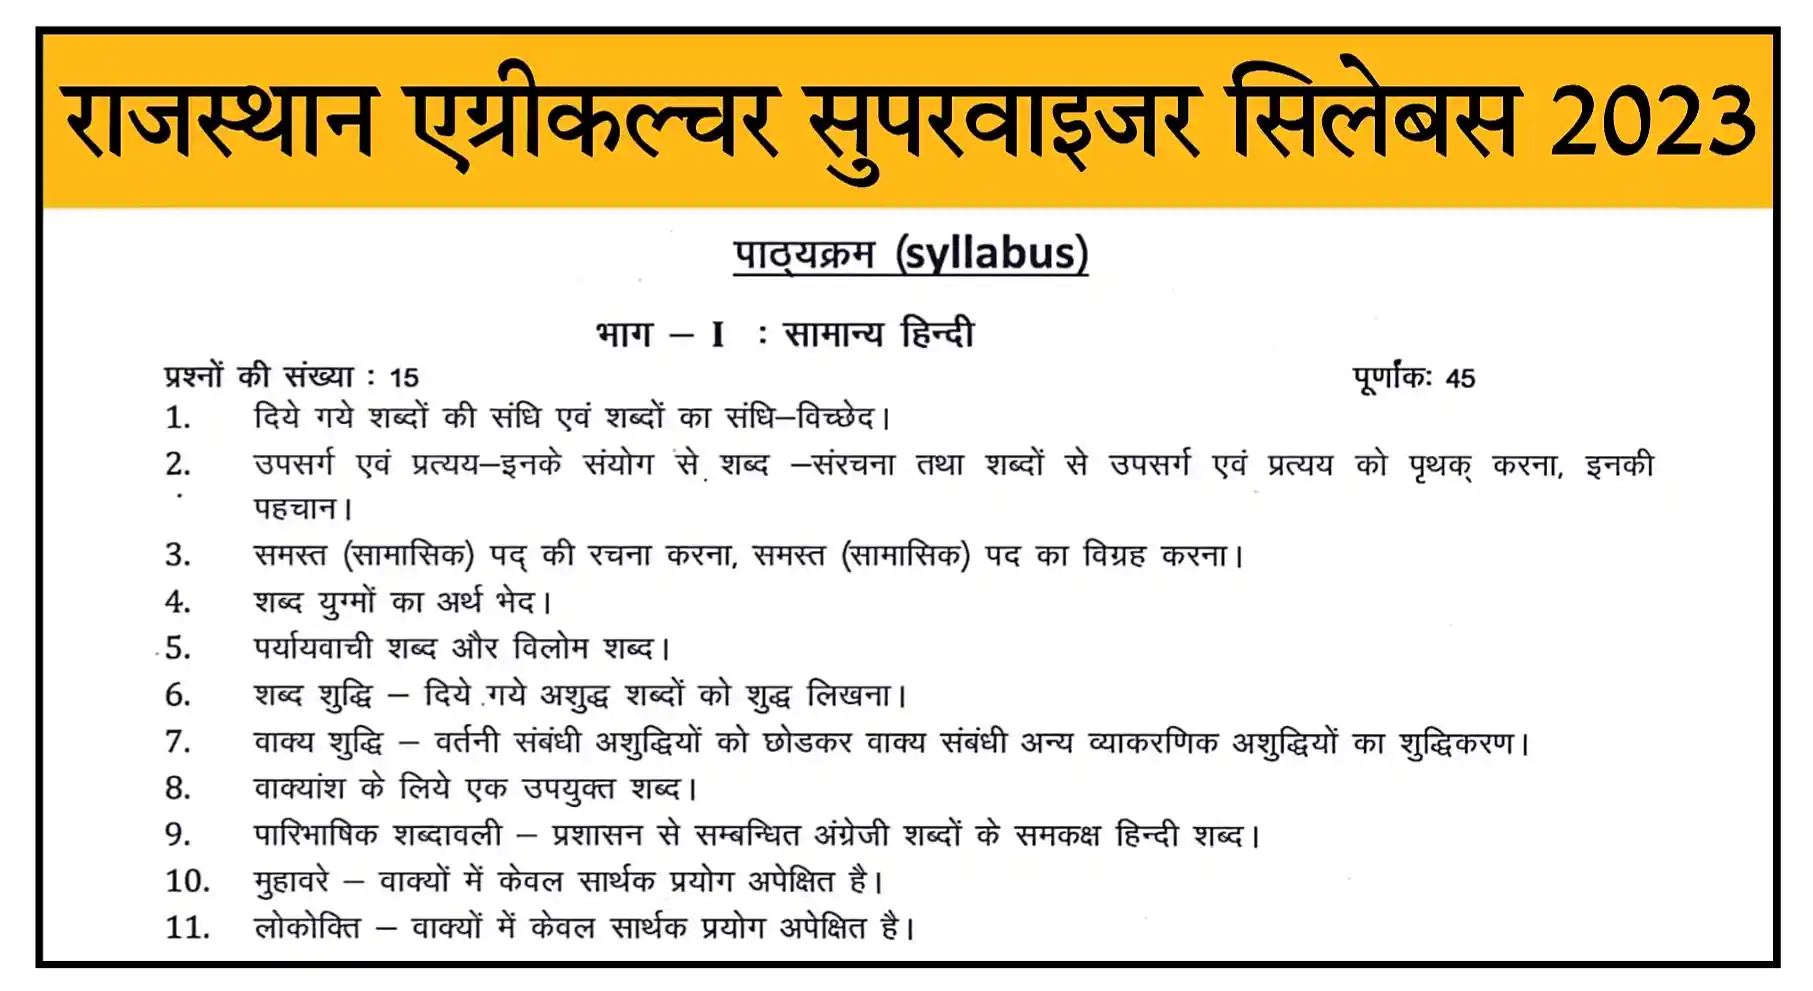 Rajasthan Agriculture Supervisor Syllabus 2023 In Hindi PDF Download Link @rssmb.rajasthan.gov.in